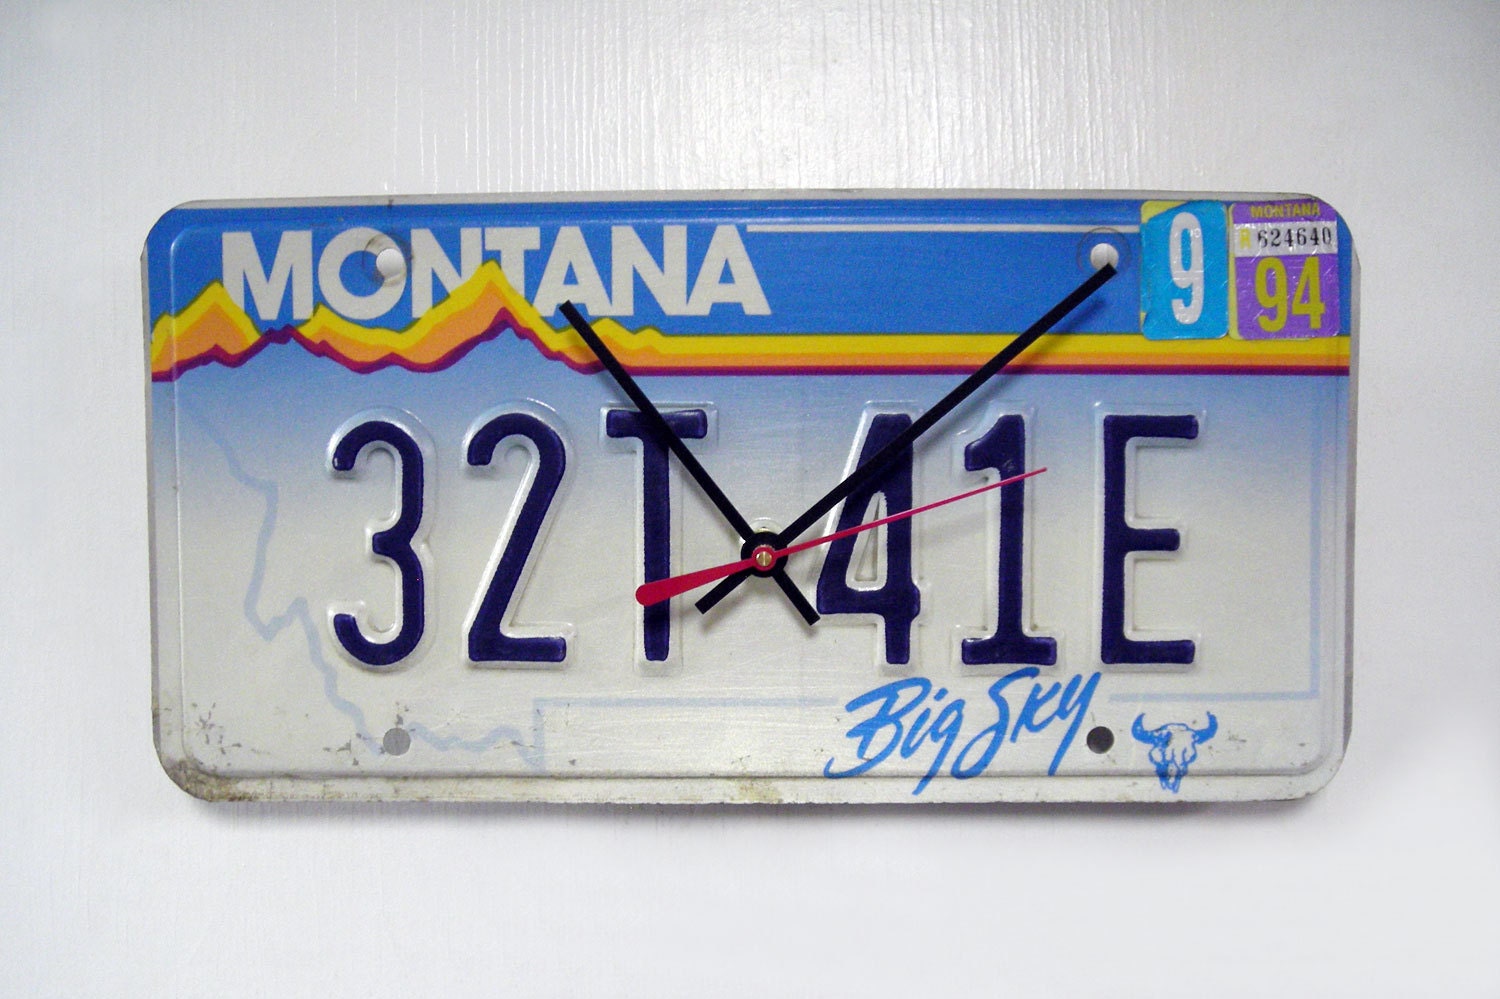 Mt License Plates